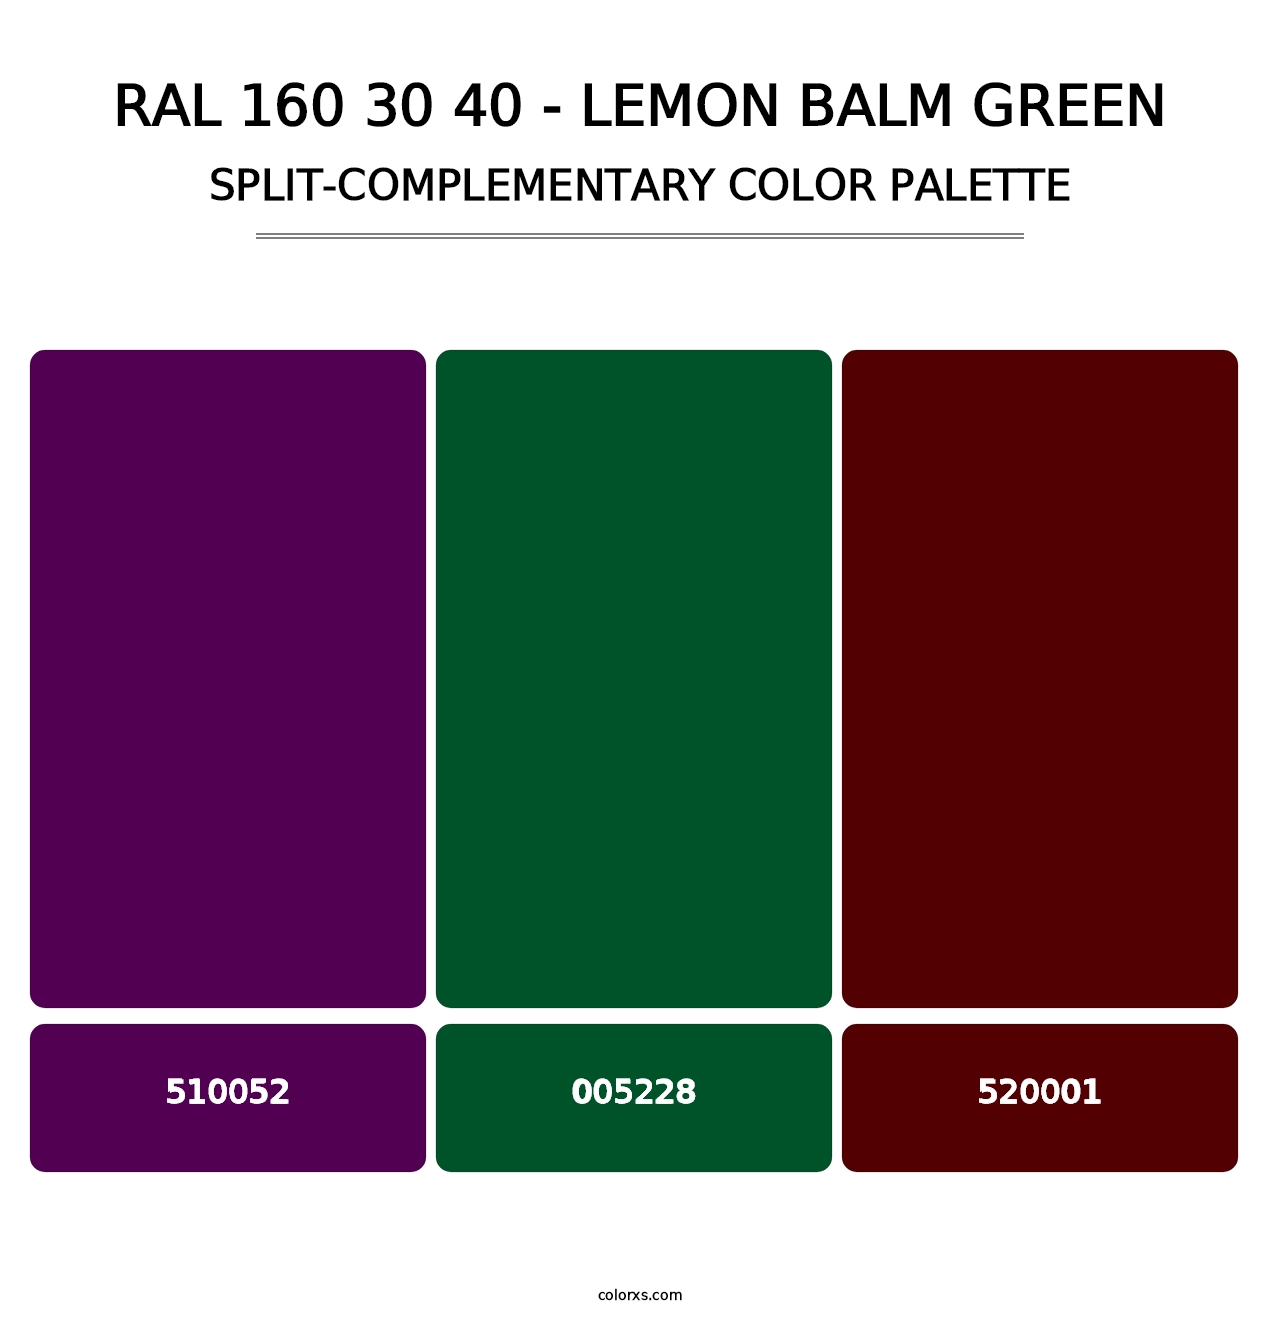 RAL 160 30 40 - Lemon Balm Green - Split-Complementary Color Palette